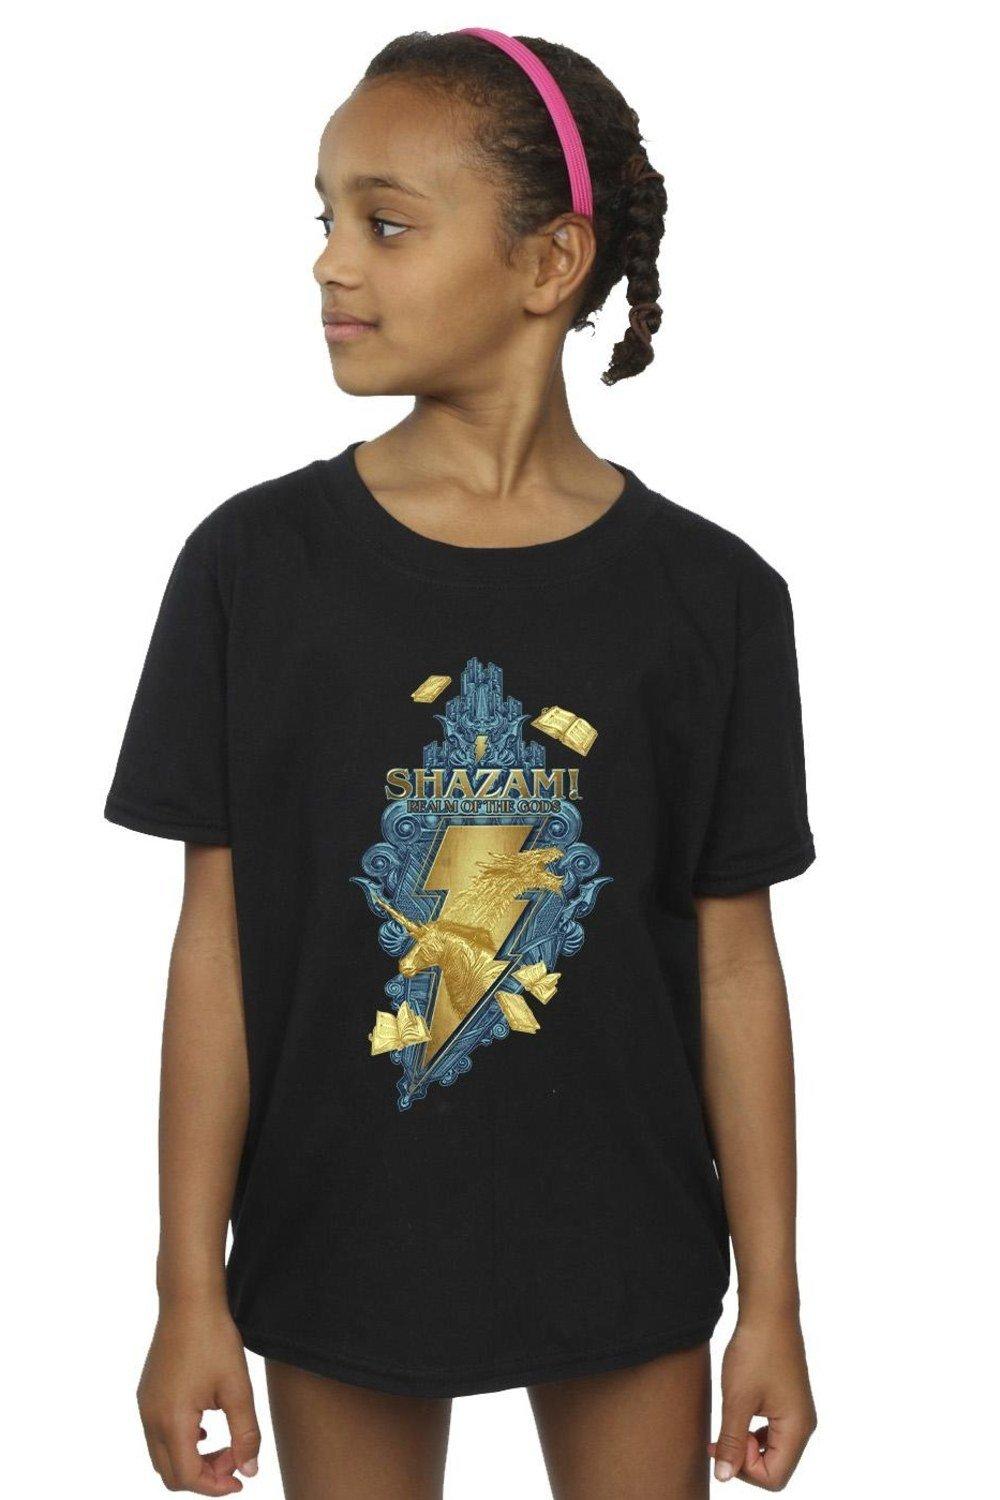 Shazam Fury Of The Gods Golden Animal Bolt Cotton T-Shirt